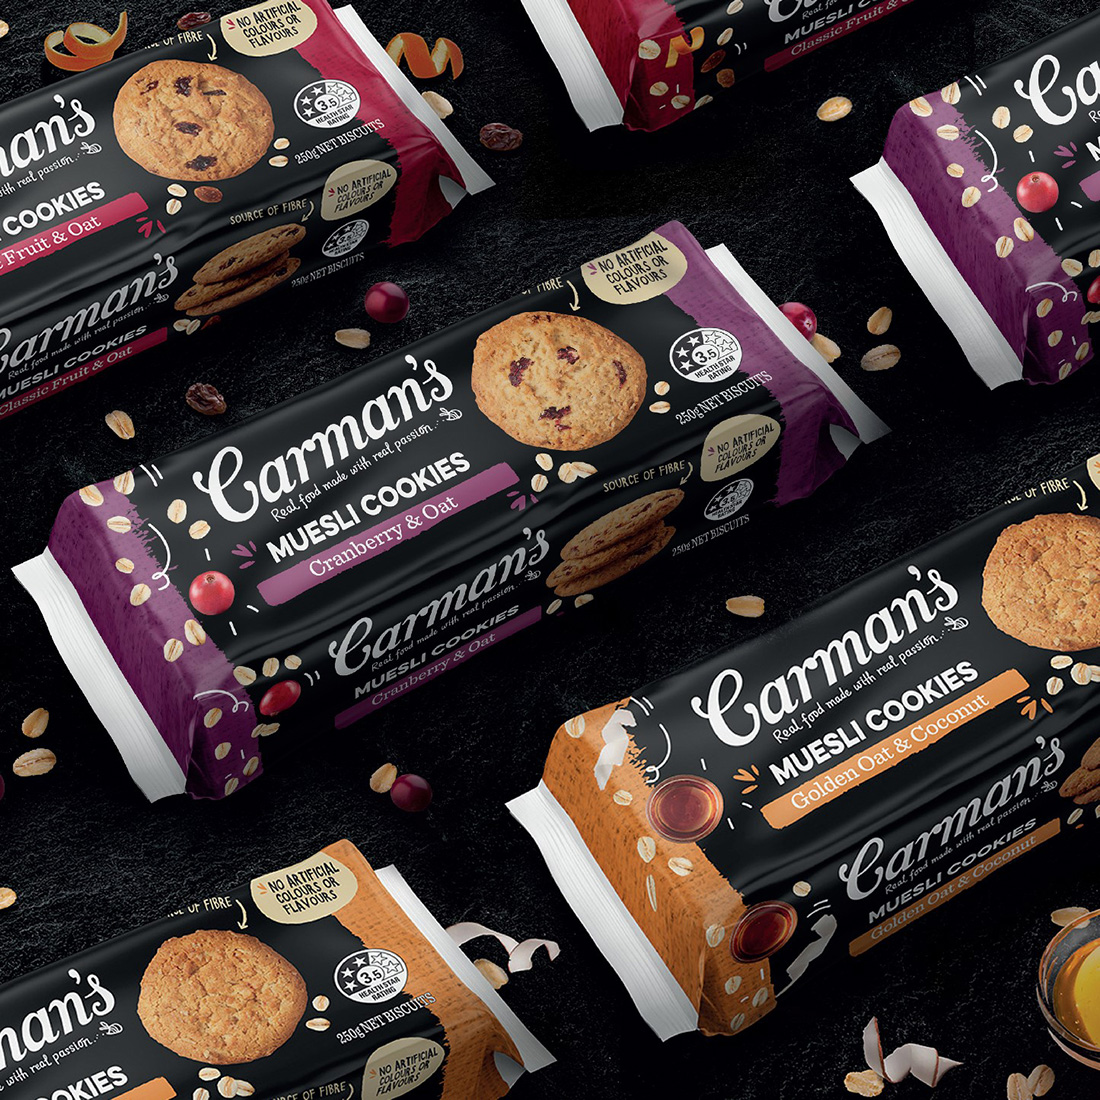 Carman's Muesli Cookies